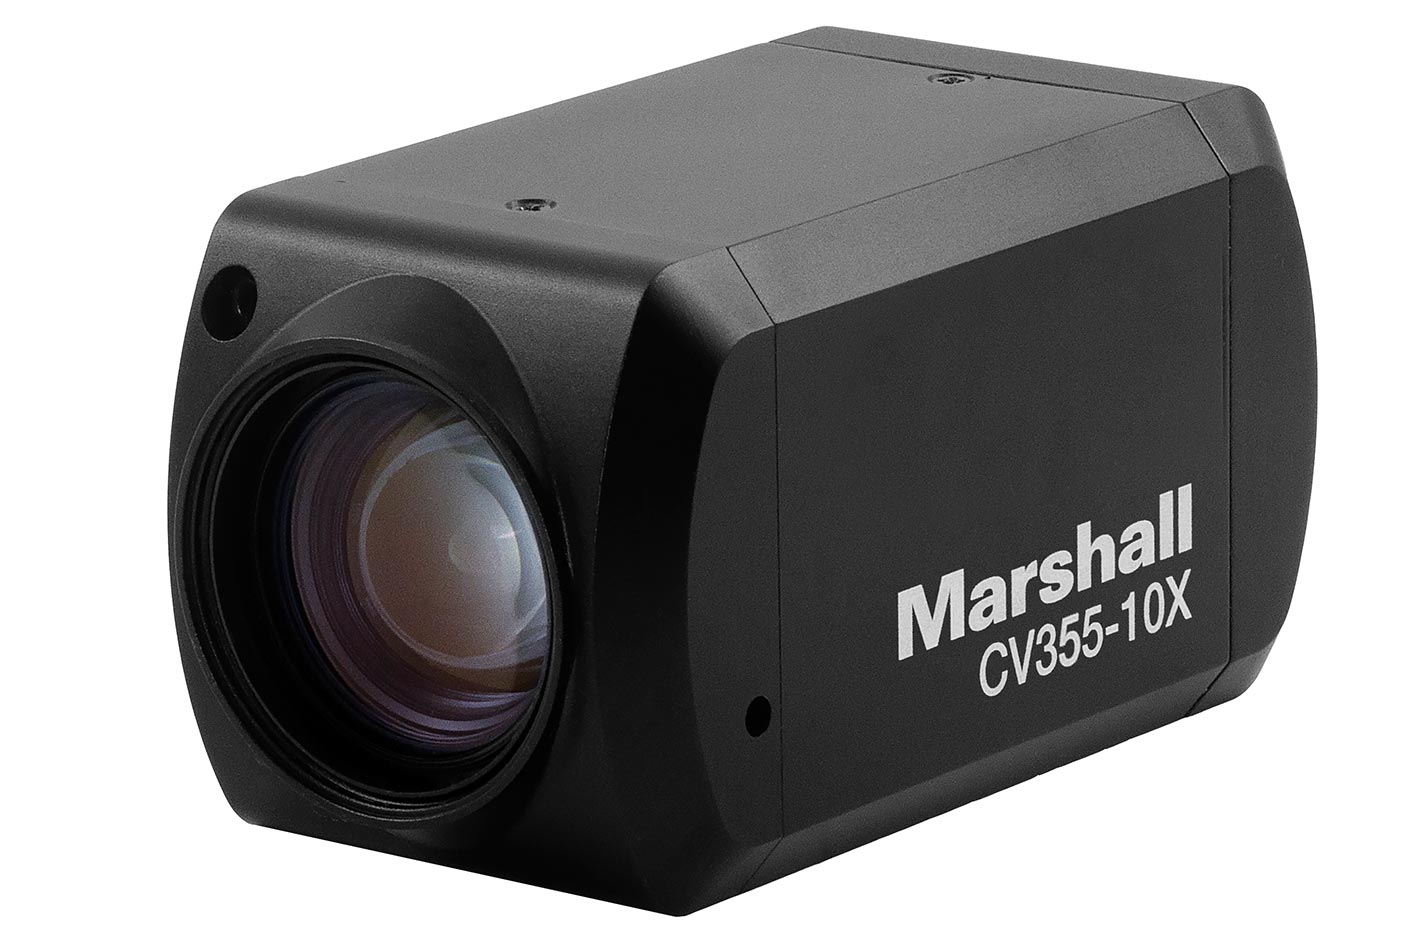 Marshall: new CV420-18X and CV355-10X zoom block cameras